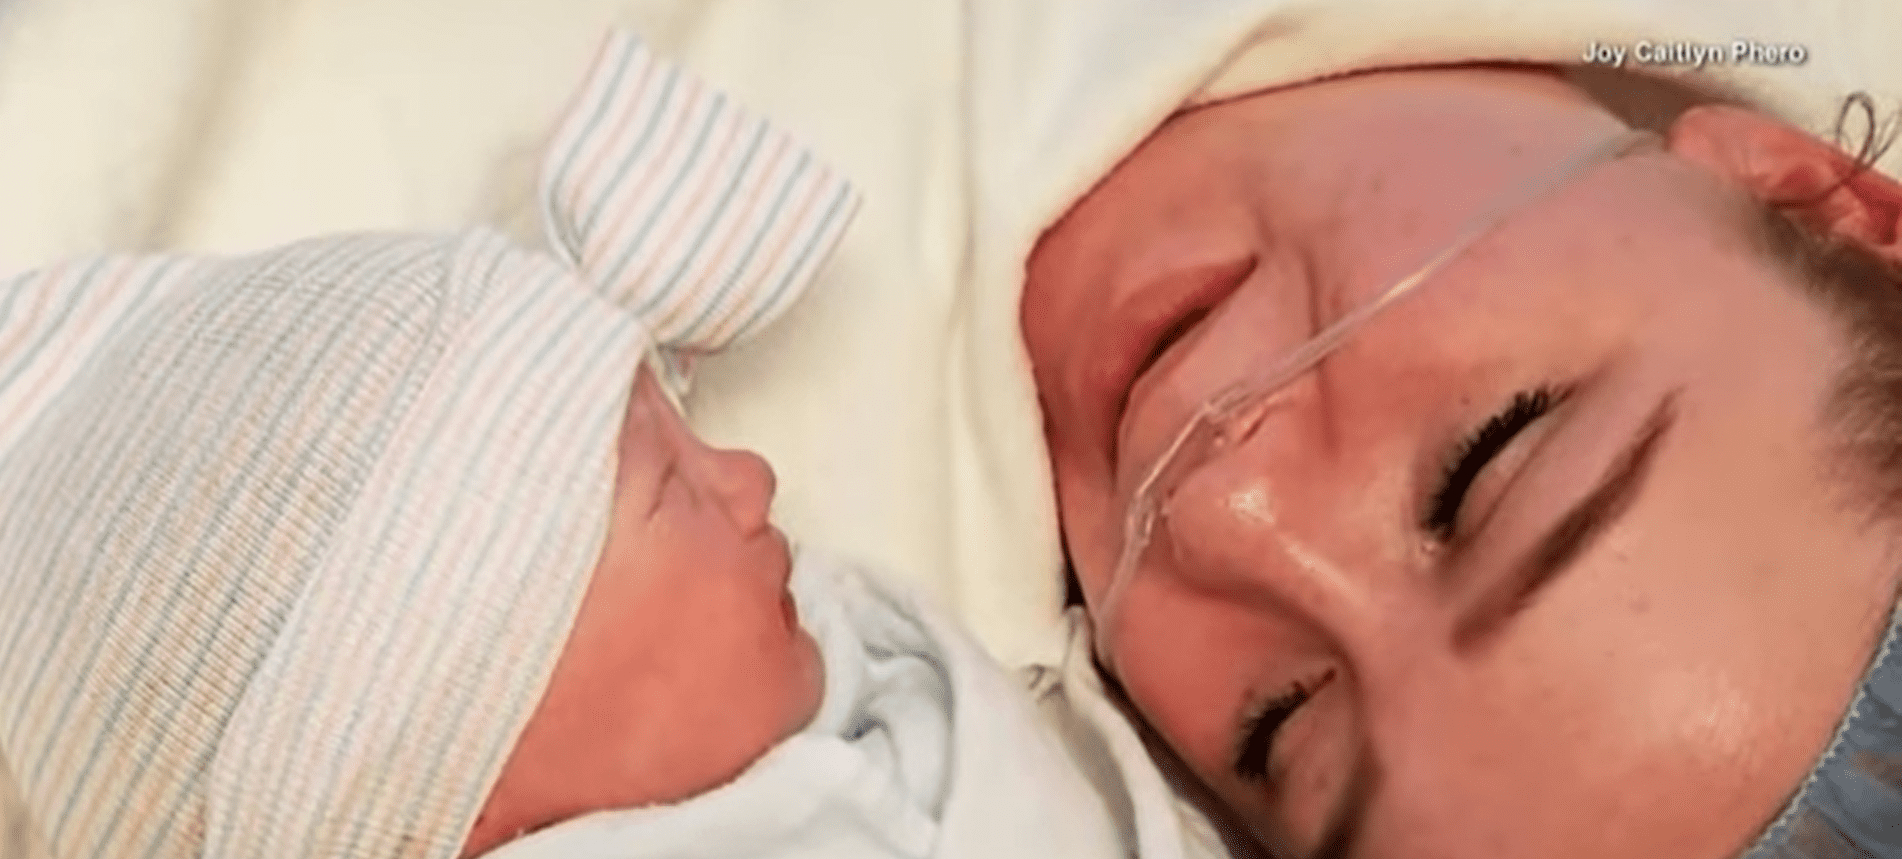  Joy Caitlyn Phero and her new born baby, Chloe May Kubat. | Source: youtube.com/Inside Edition